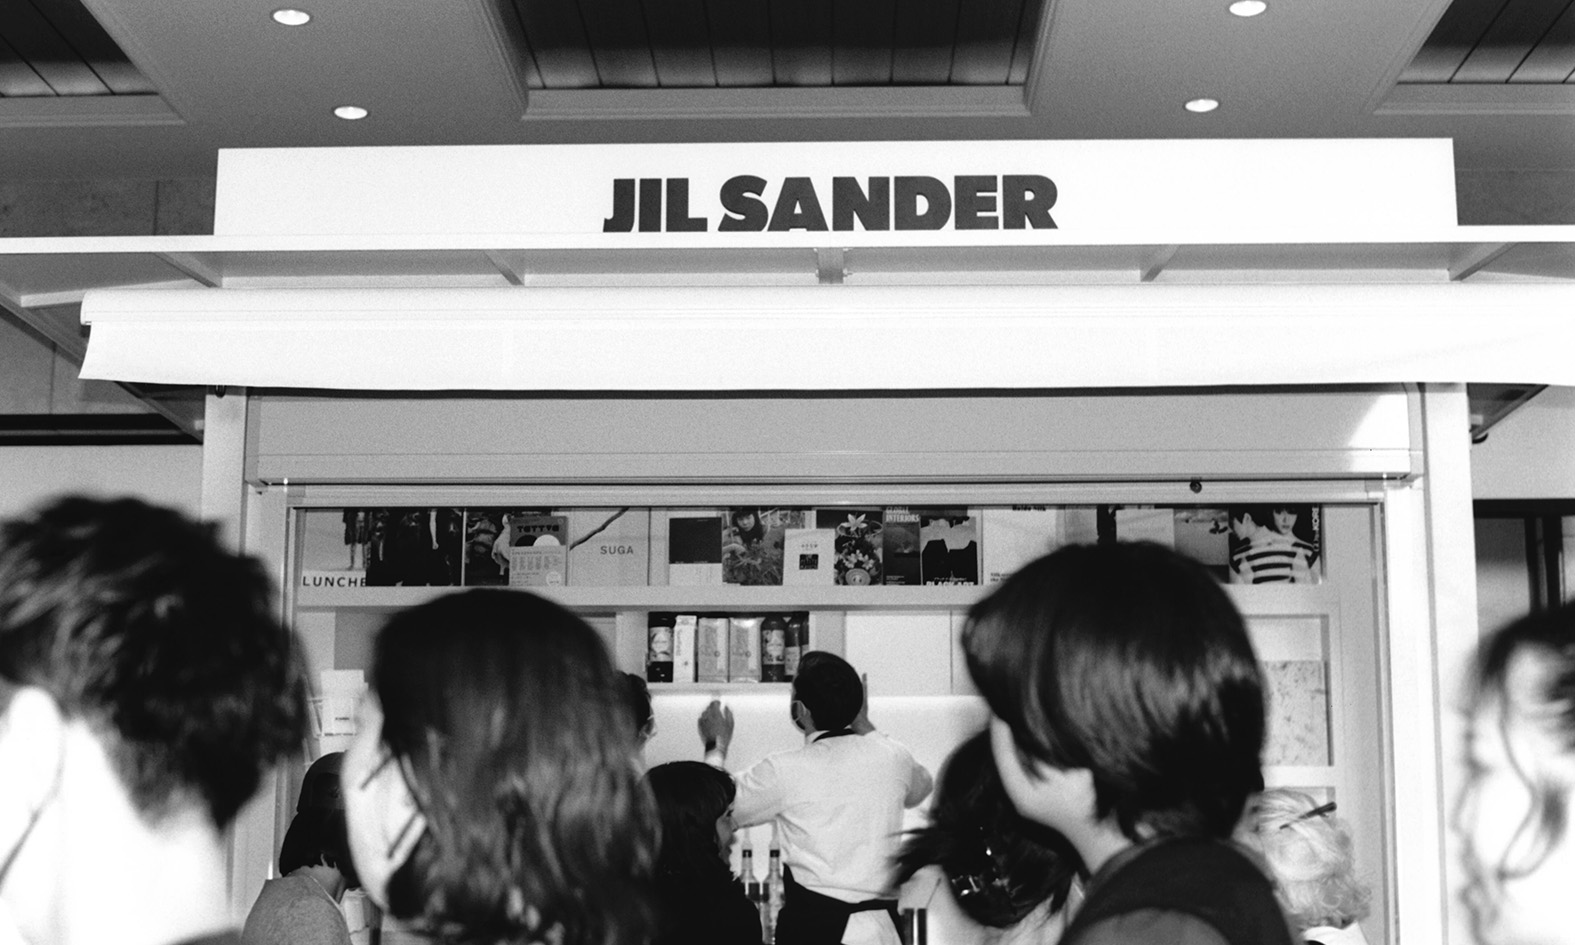 JIL SANDER 邀请摄影师 Nikki McClarron 拍摄 Kyoto Kiosk 特别企划